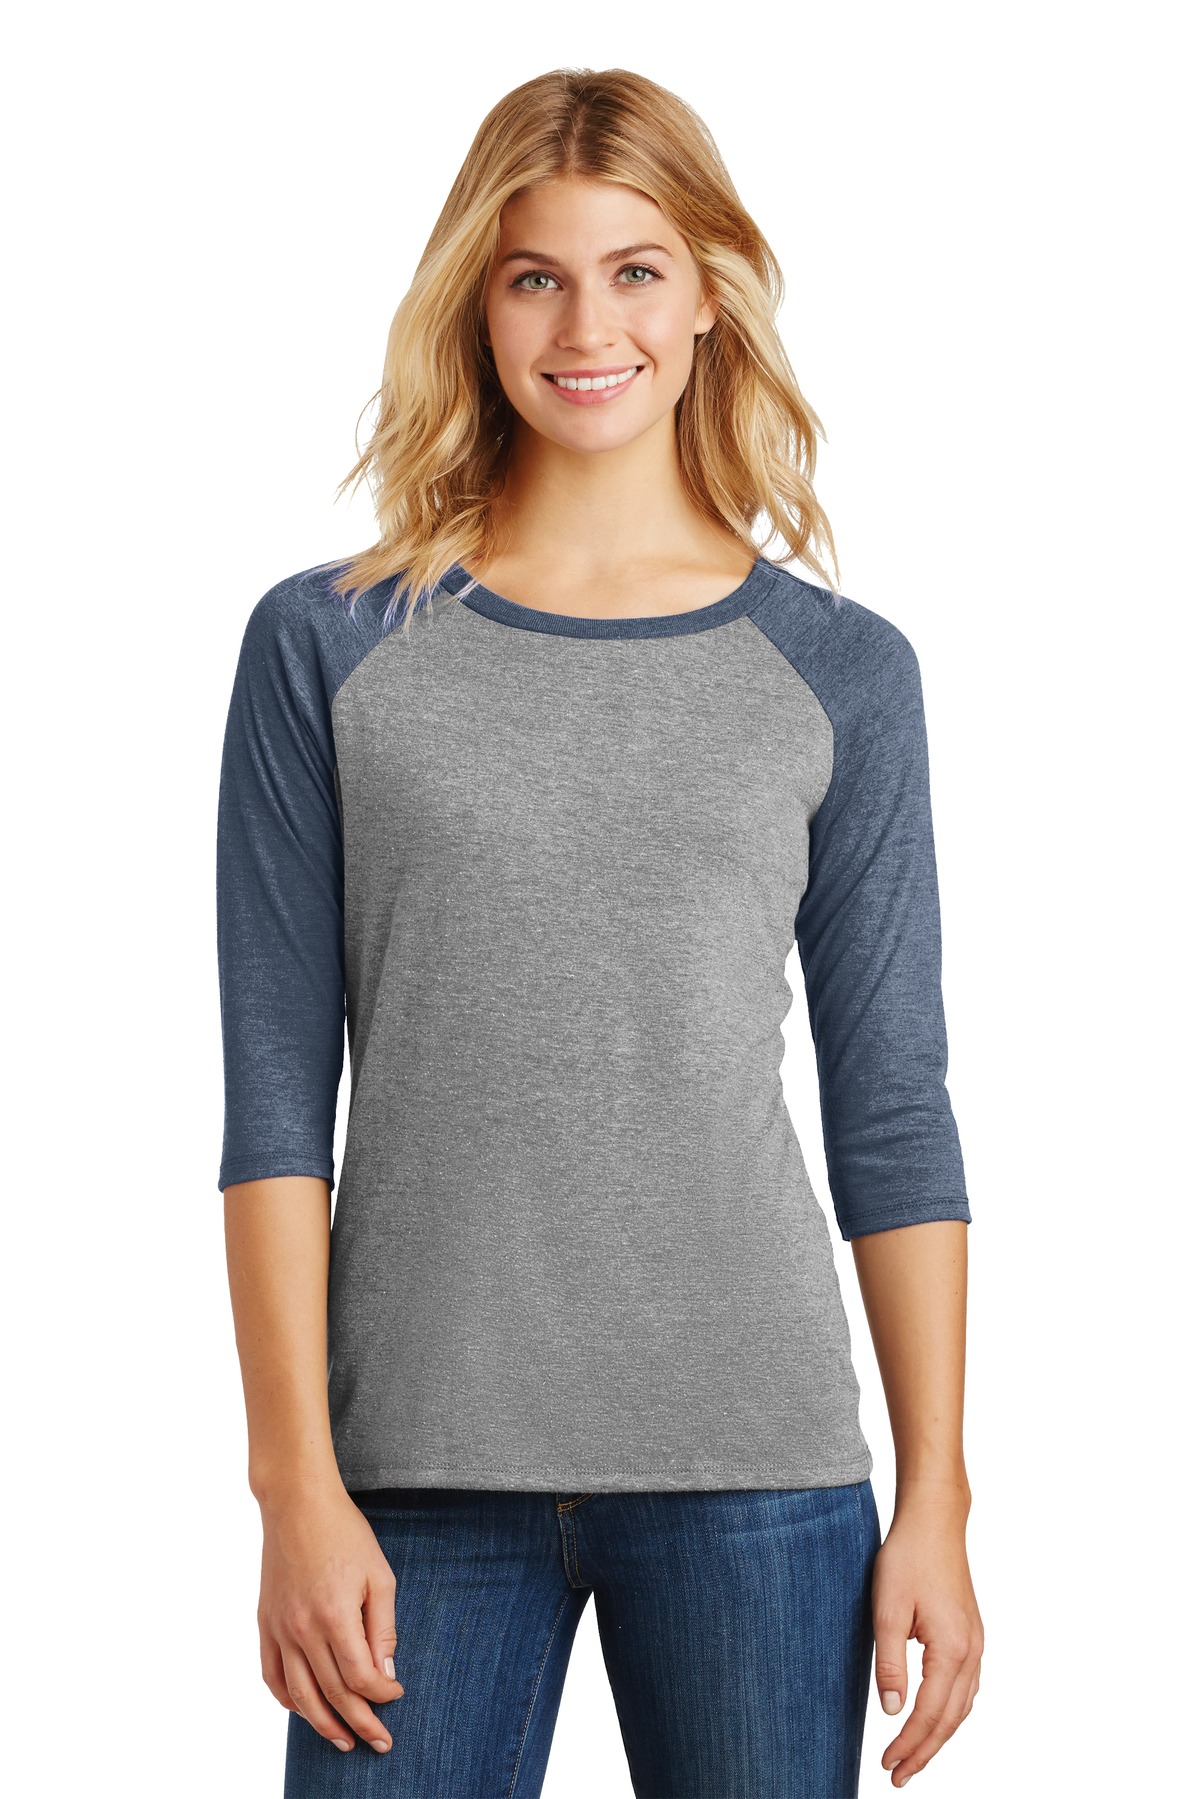 Årvågenhed Klage Fitness District DM136L | Women's Perfect Tri ® 3/4-Sleeve Raglan | ShirtSpace